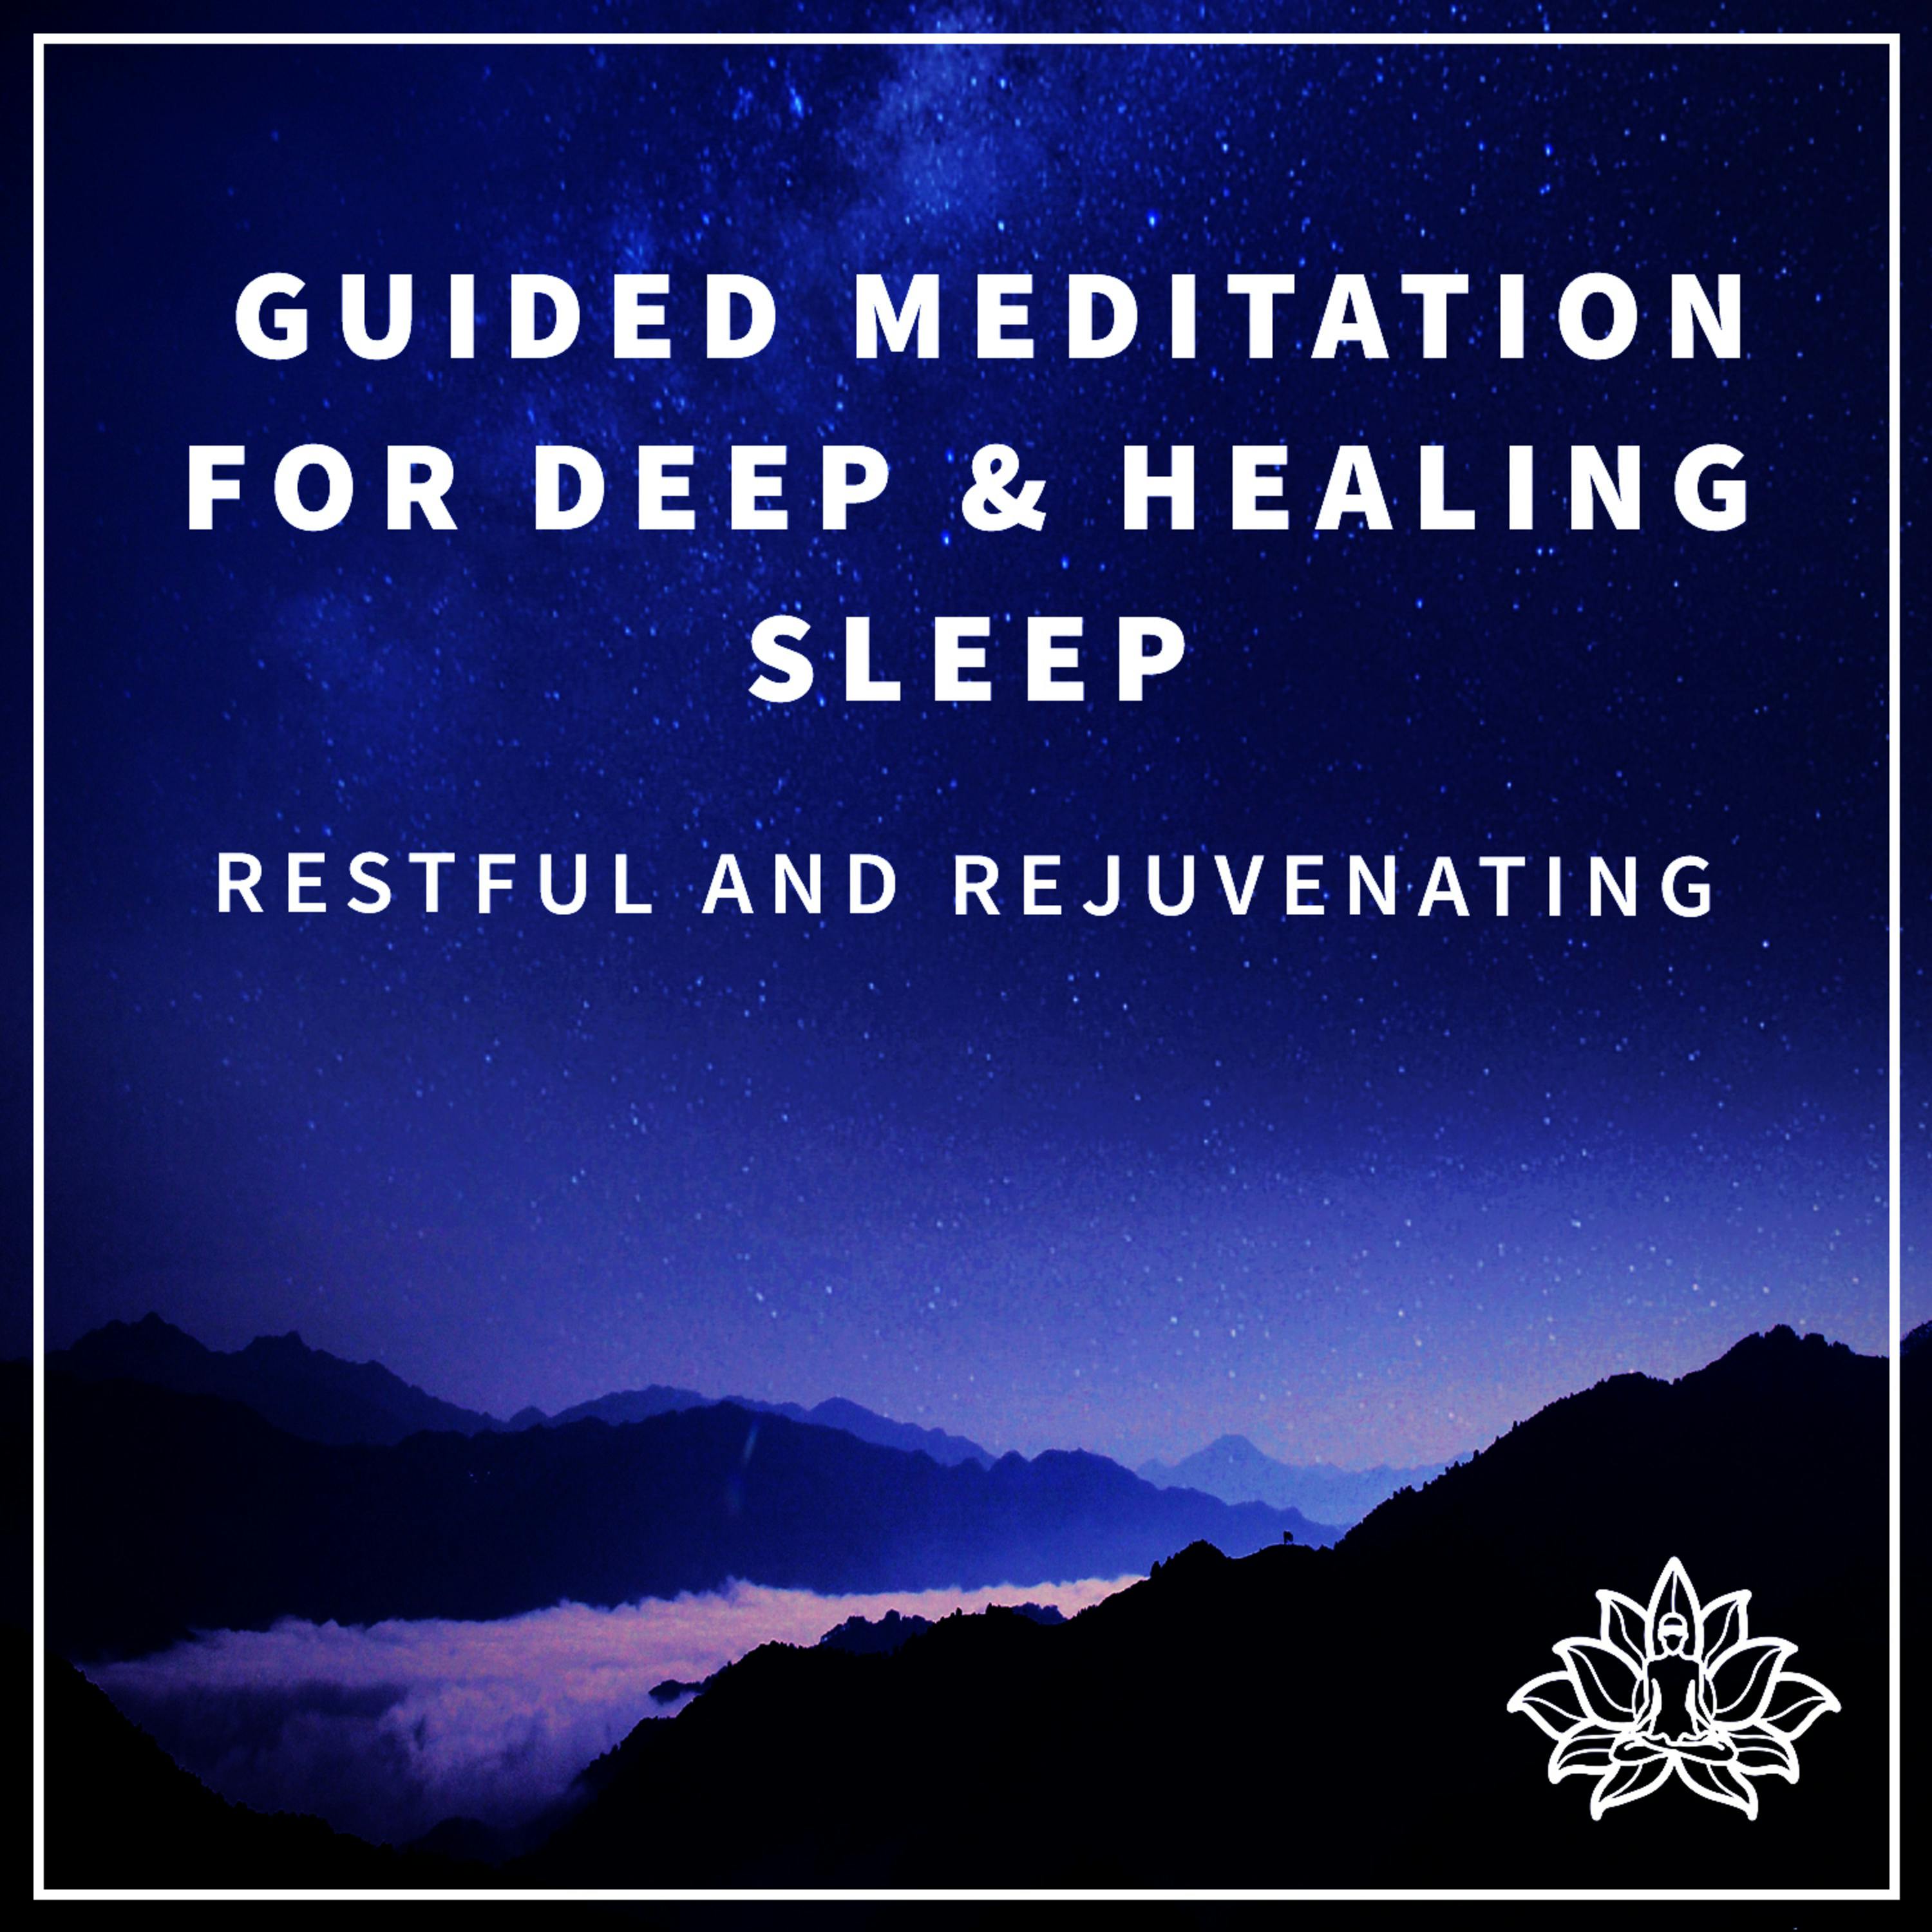 #13 GUIDED MEDITATION FOR DEEP & HEALING SLEEP - Restful and rejuvenating 😴 - IMMERSIVE GUIDED MEDITATION 💤